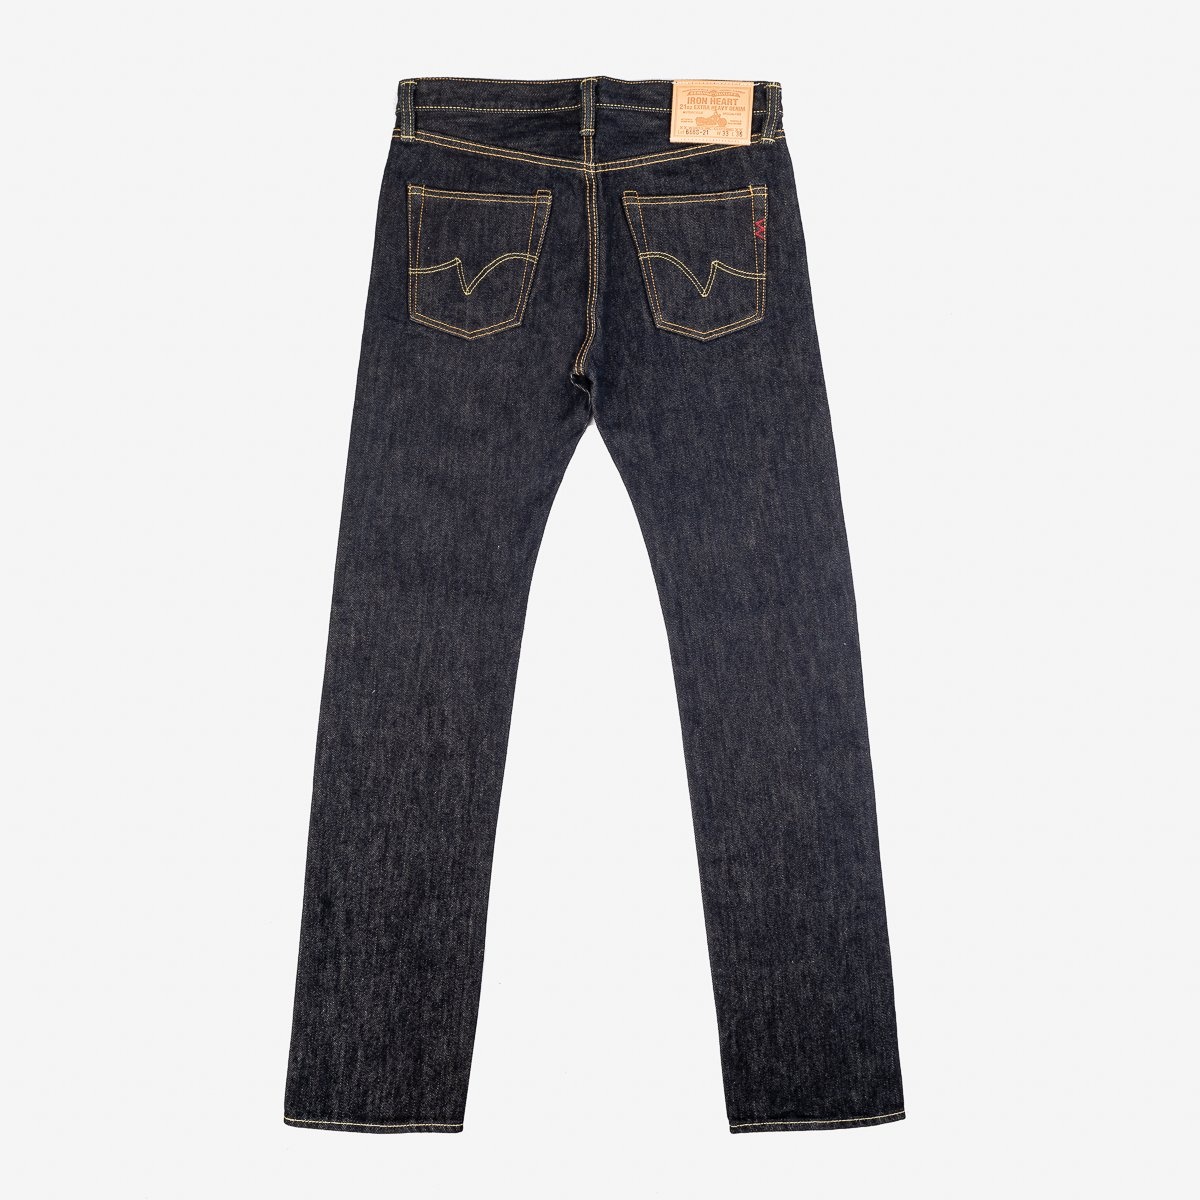 IH-666S-21 21oz Selvedge Denim Slim Straight Cut Jeans - Indigo - 5